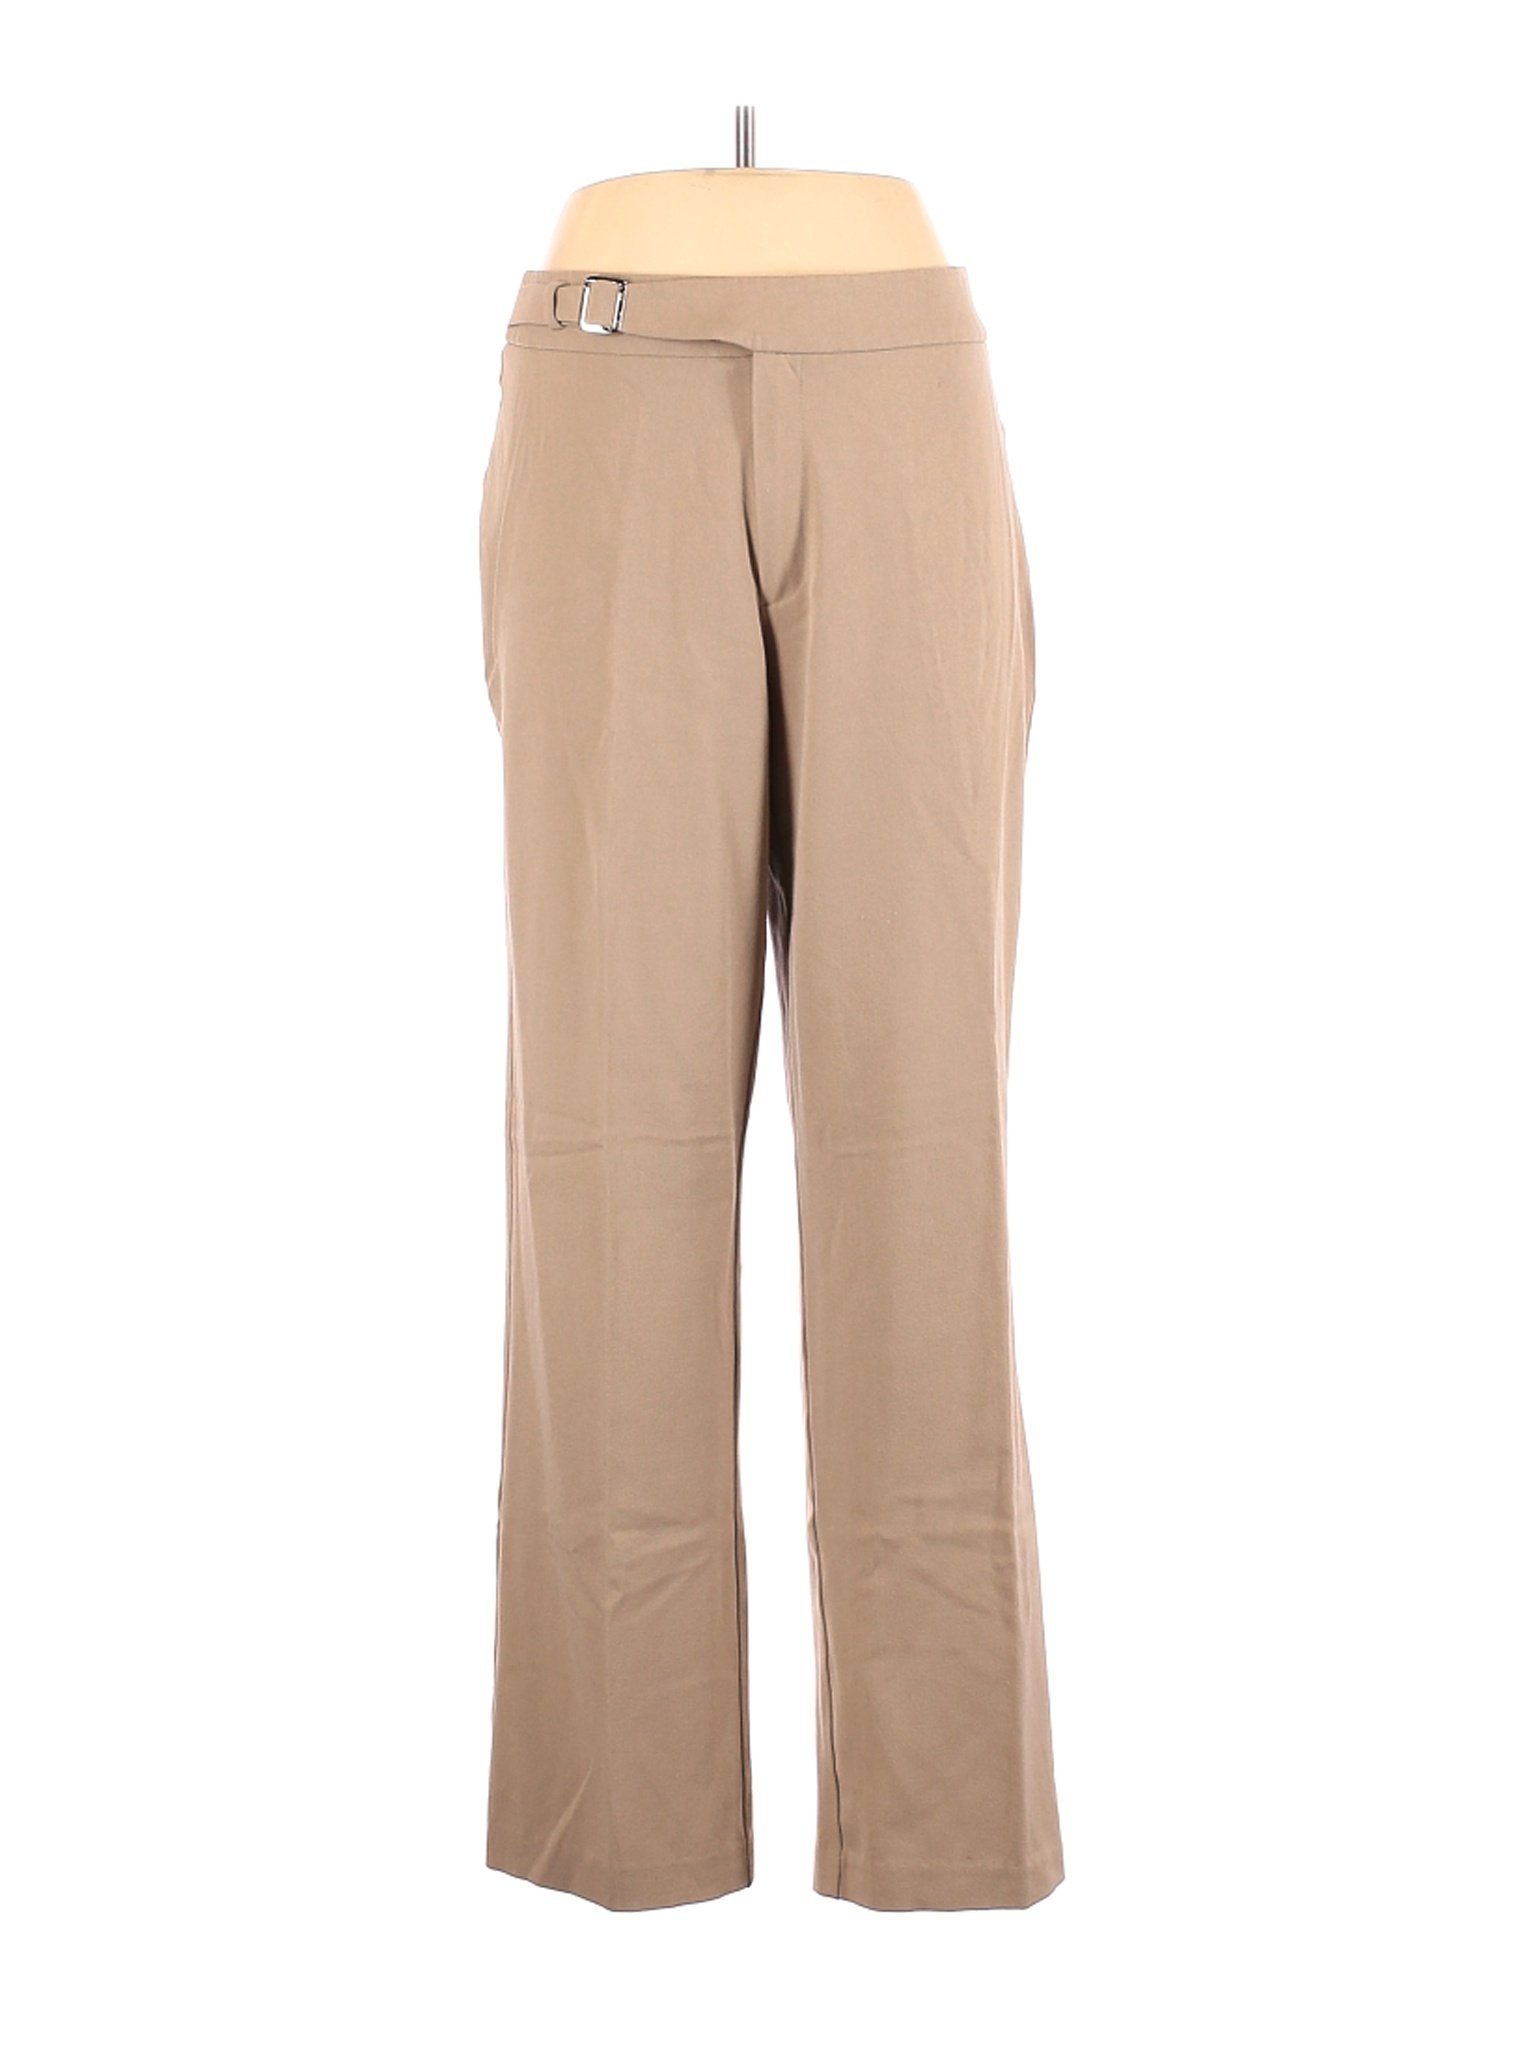 Briggs New York Women Brown Dress Pants 12 | eBay